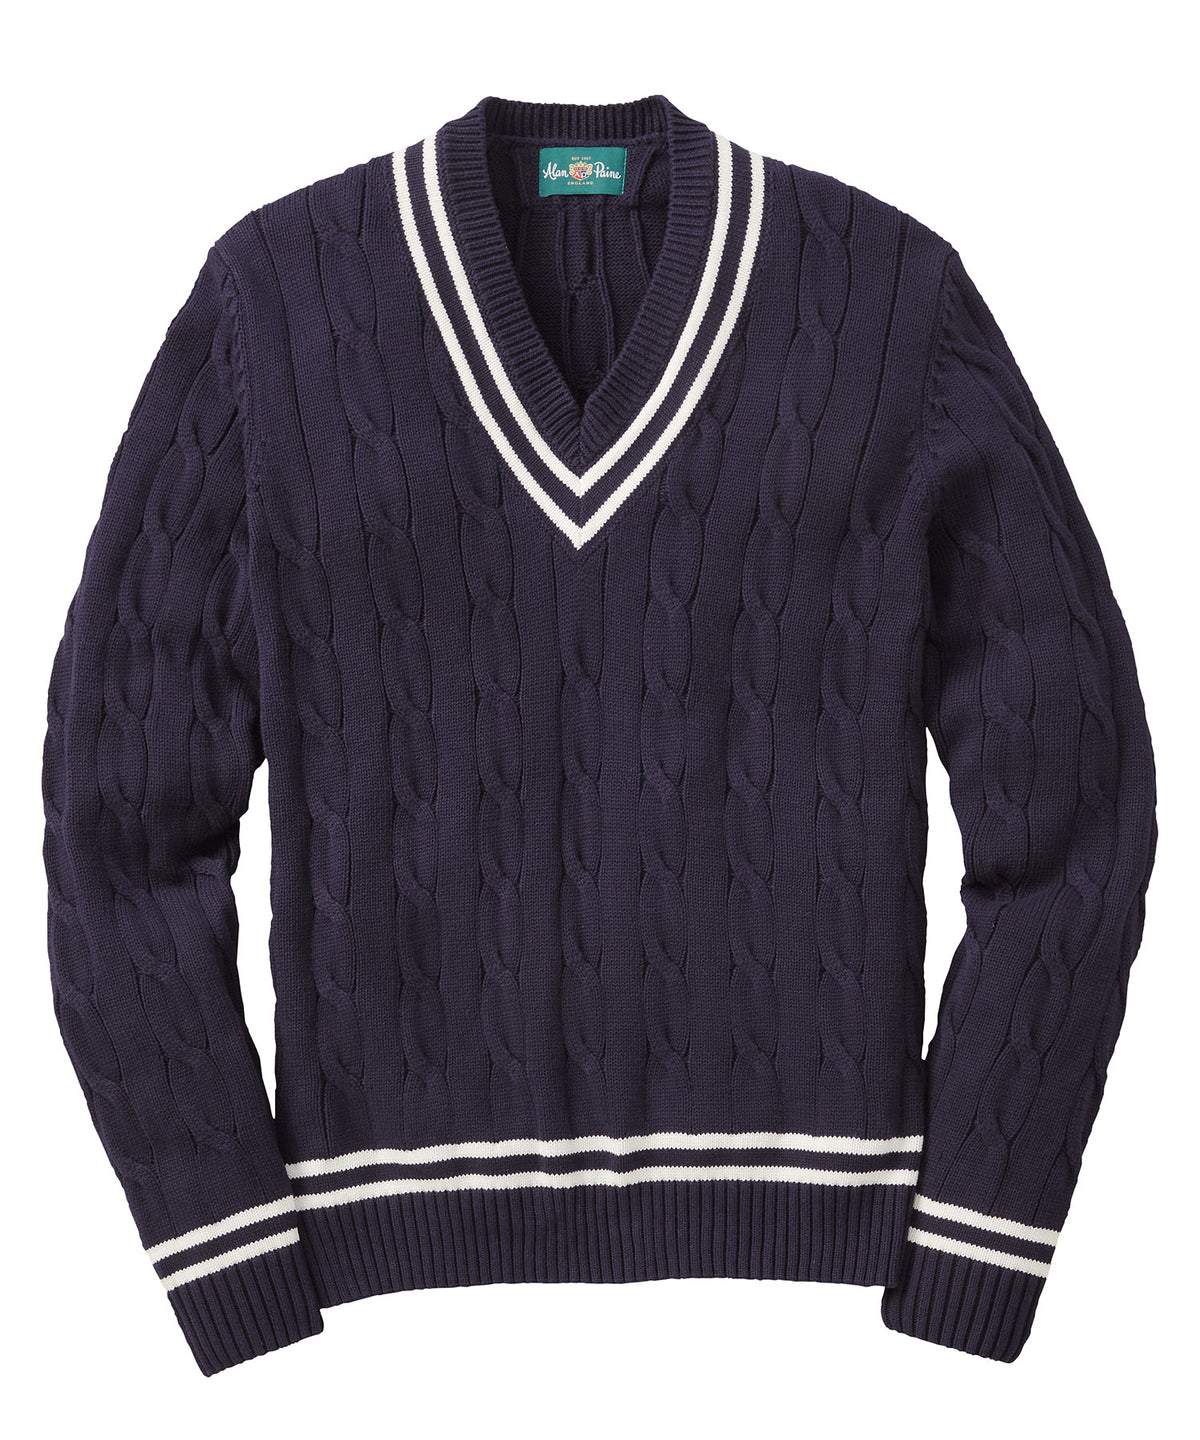 Alan Paine Sandridge Cotton Cable Tennis Sweater